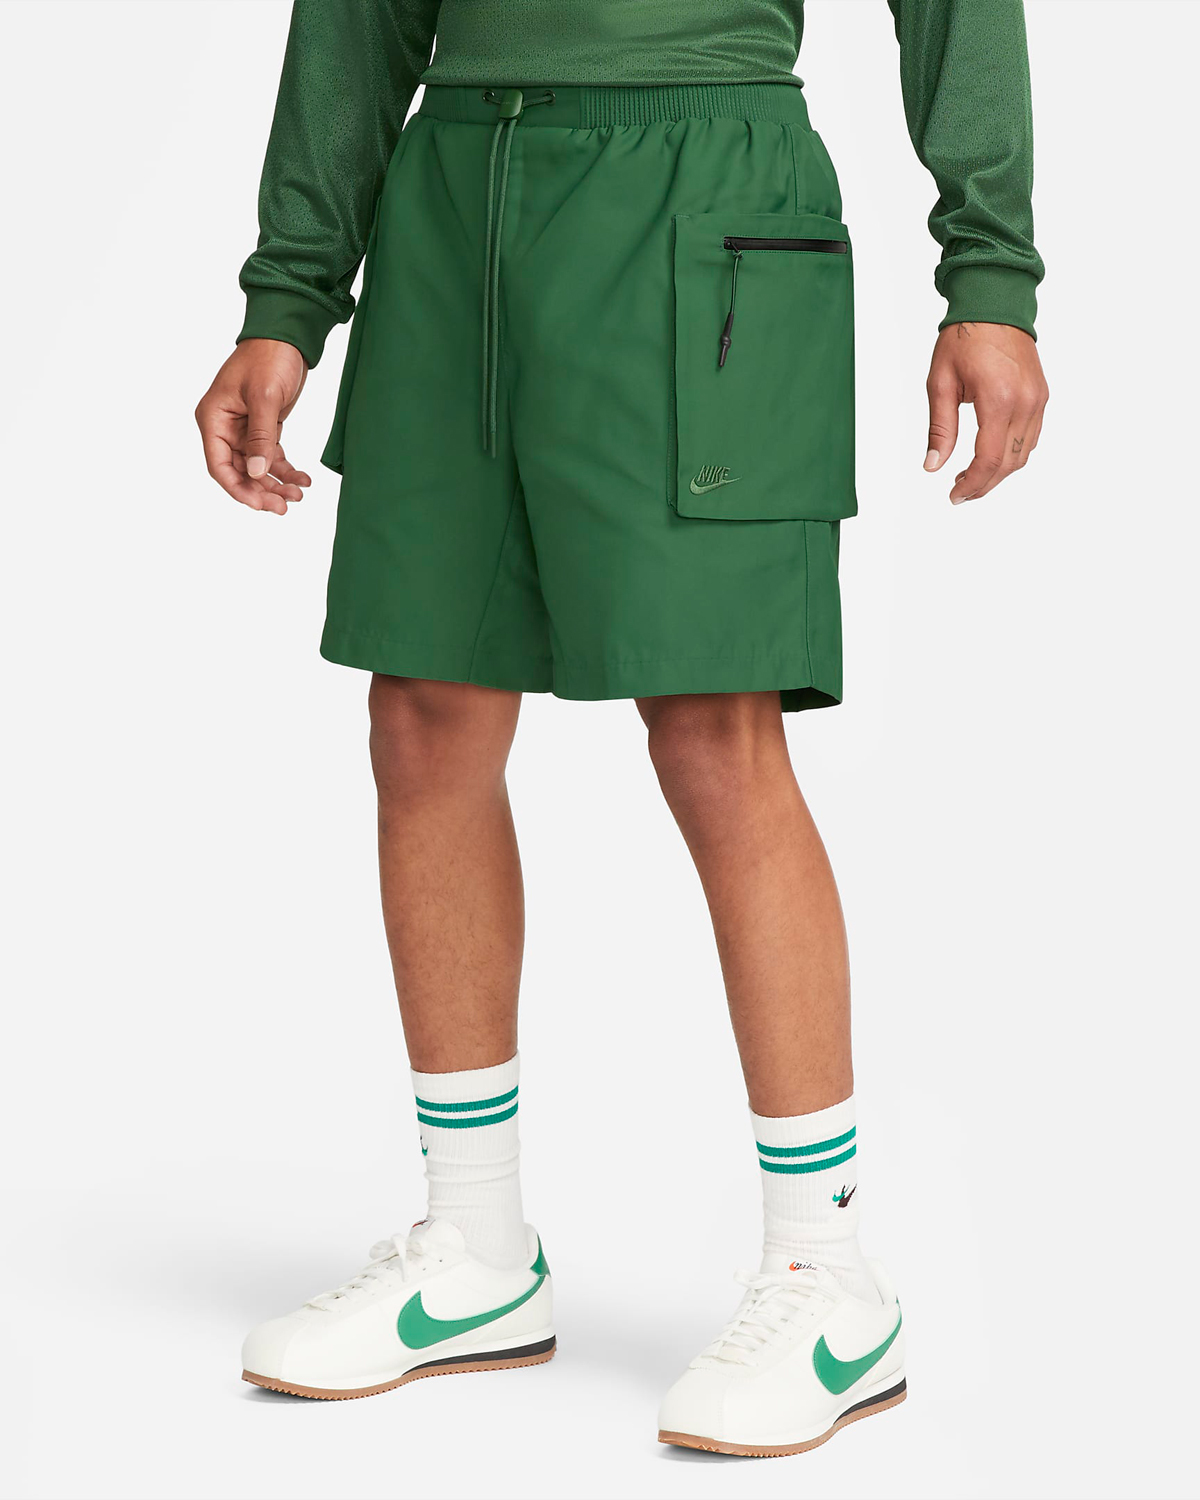 Nike-Sportswear-Tech-Pack-Utility-Shorts-Fir-Green